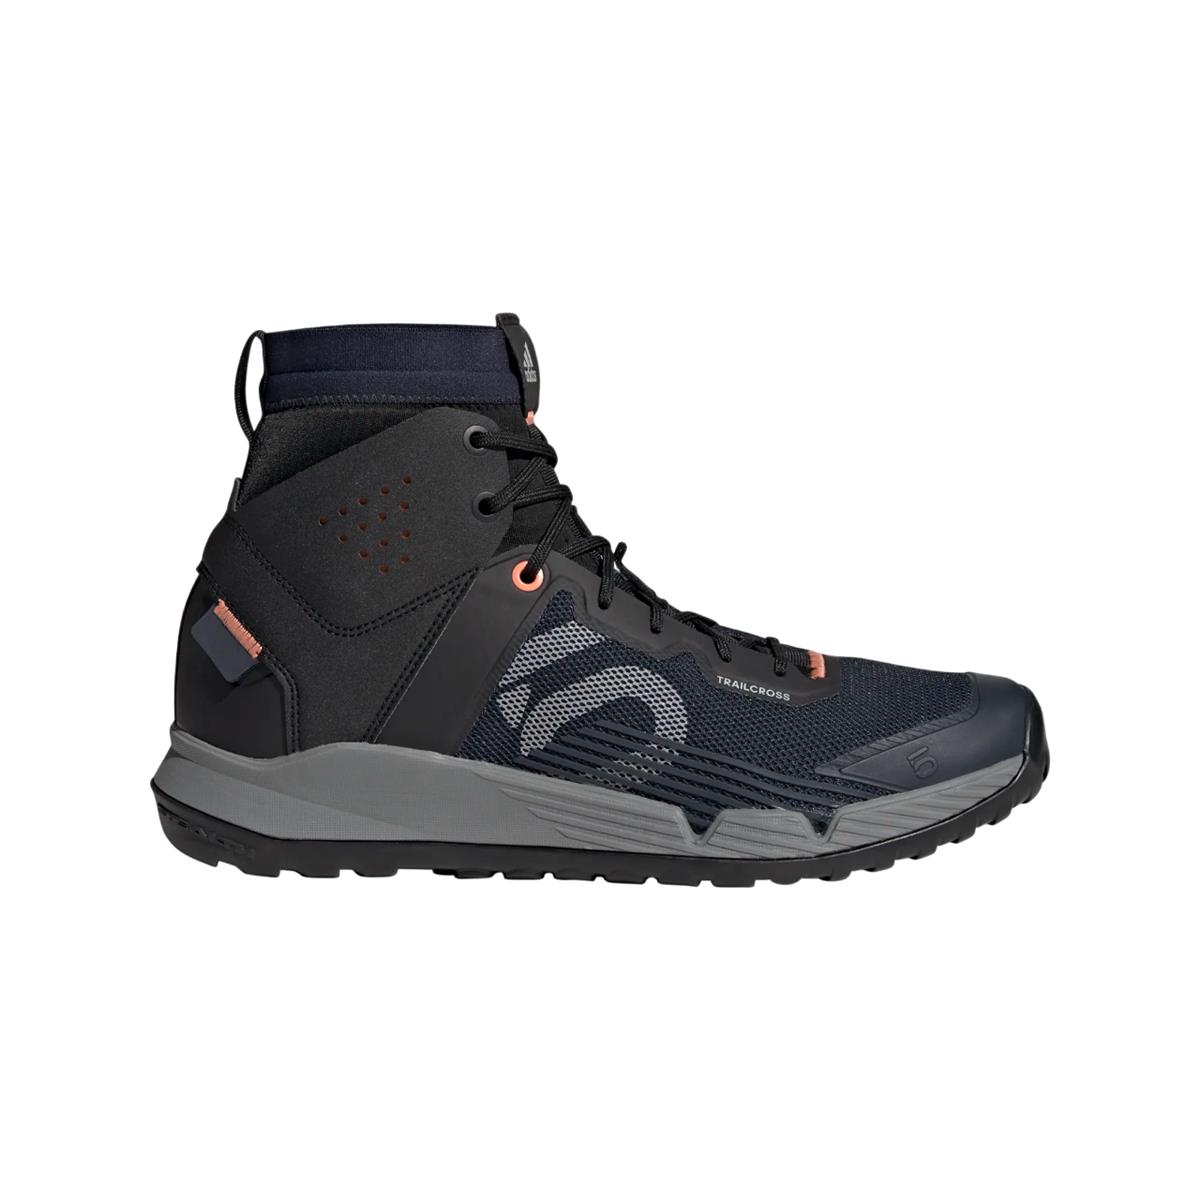 Flat 5.10 Trailcross Mid Pro MTB Shoes Black/Grey Size 42